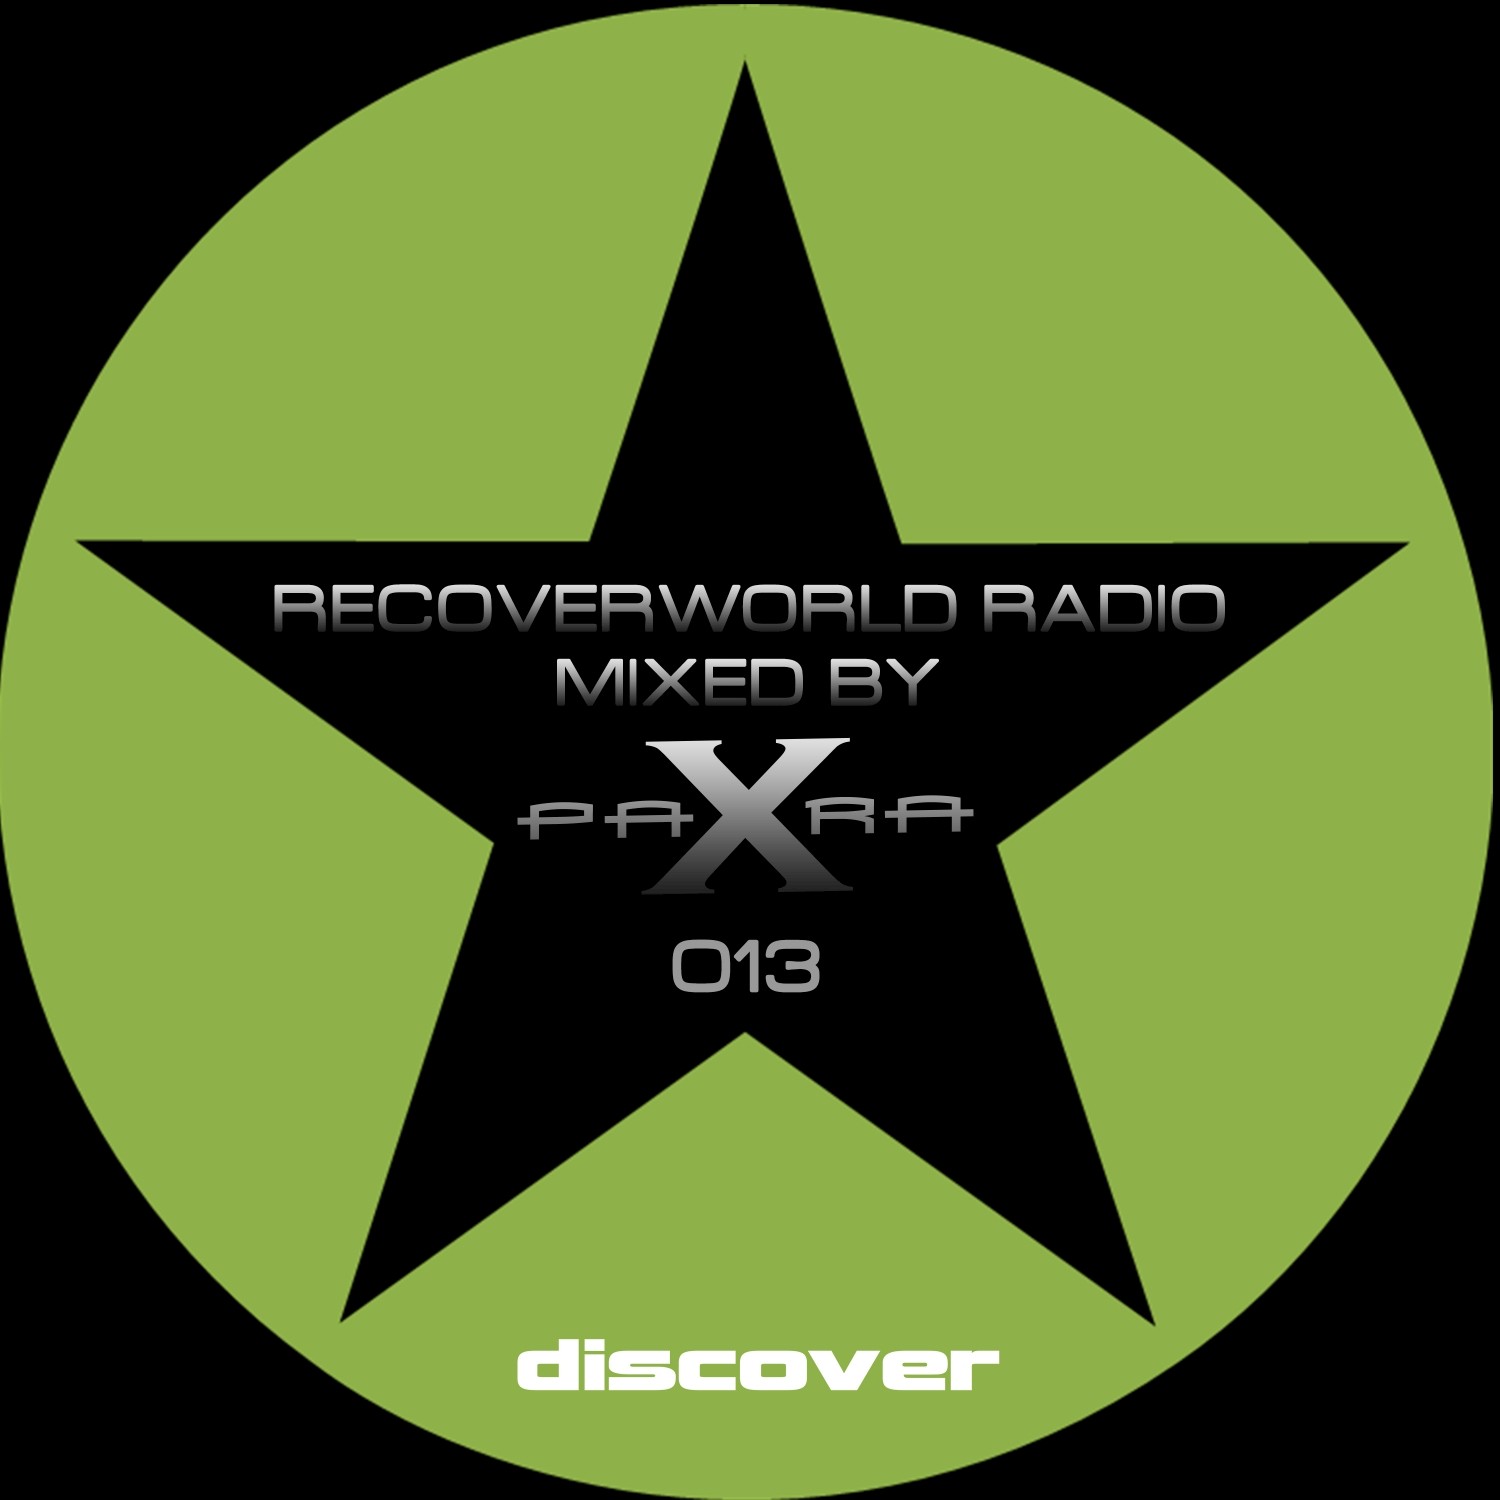 Recoverworld Radio 013